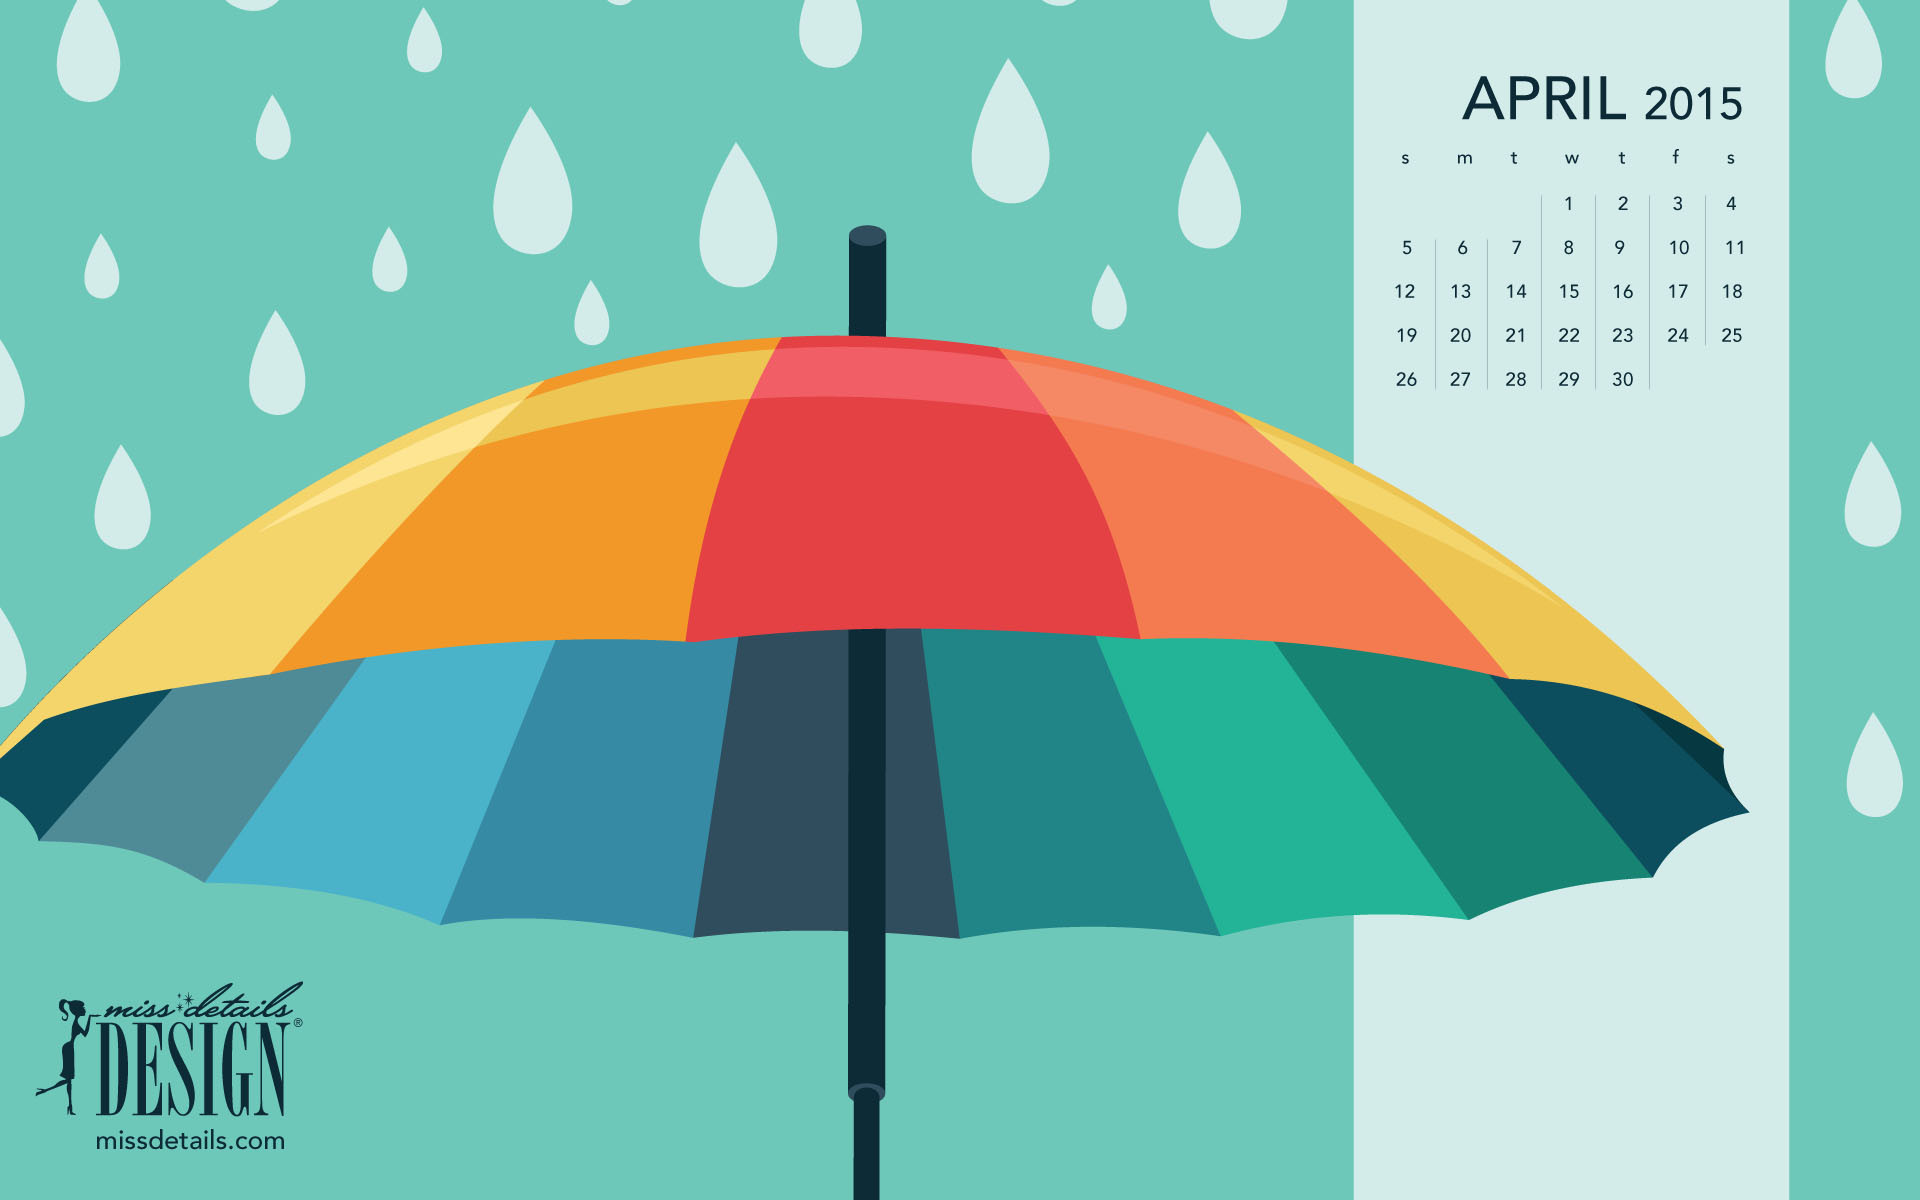 1920x1200 Free inspiring April 2015 desktop calendar from missdetails.com - April  Showers